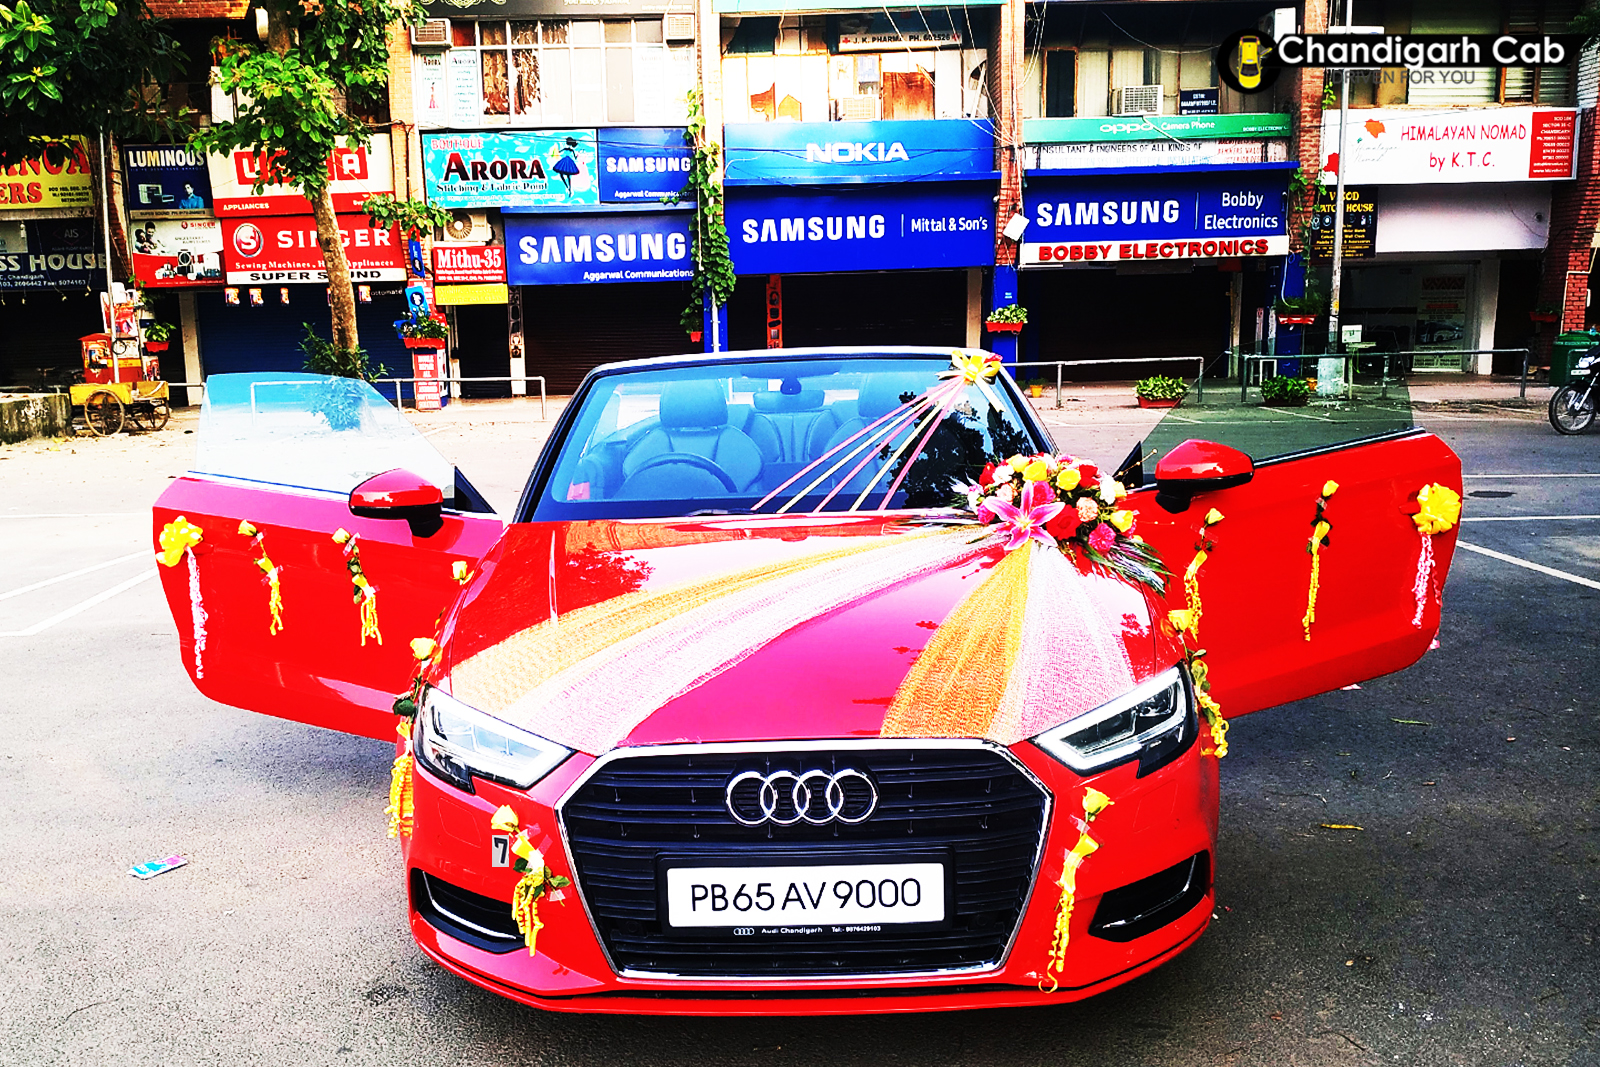 Luxury car on rent for wedding Chandigarh wedding cars Wedding car rental luxury cars for wedding book audi for rent in chandigarh Luxury Wedding Cars, Luxury Chandigarh Cab, Hire Luxury Cars in Chandigarh, Wedding cars in Chandigarh, doli cars, shadi car